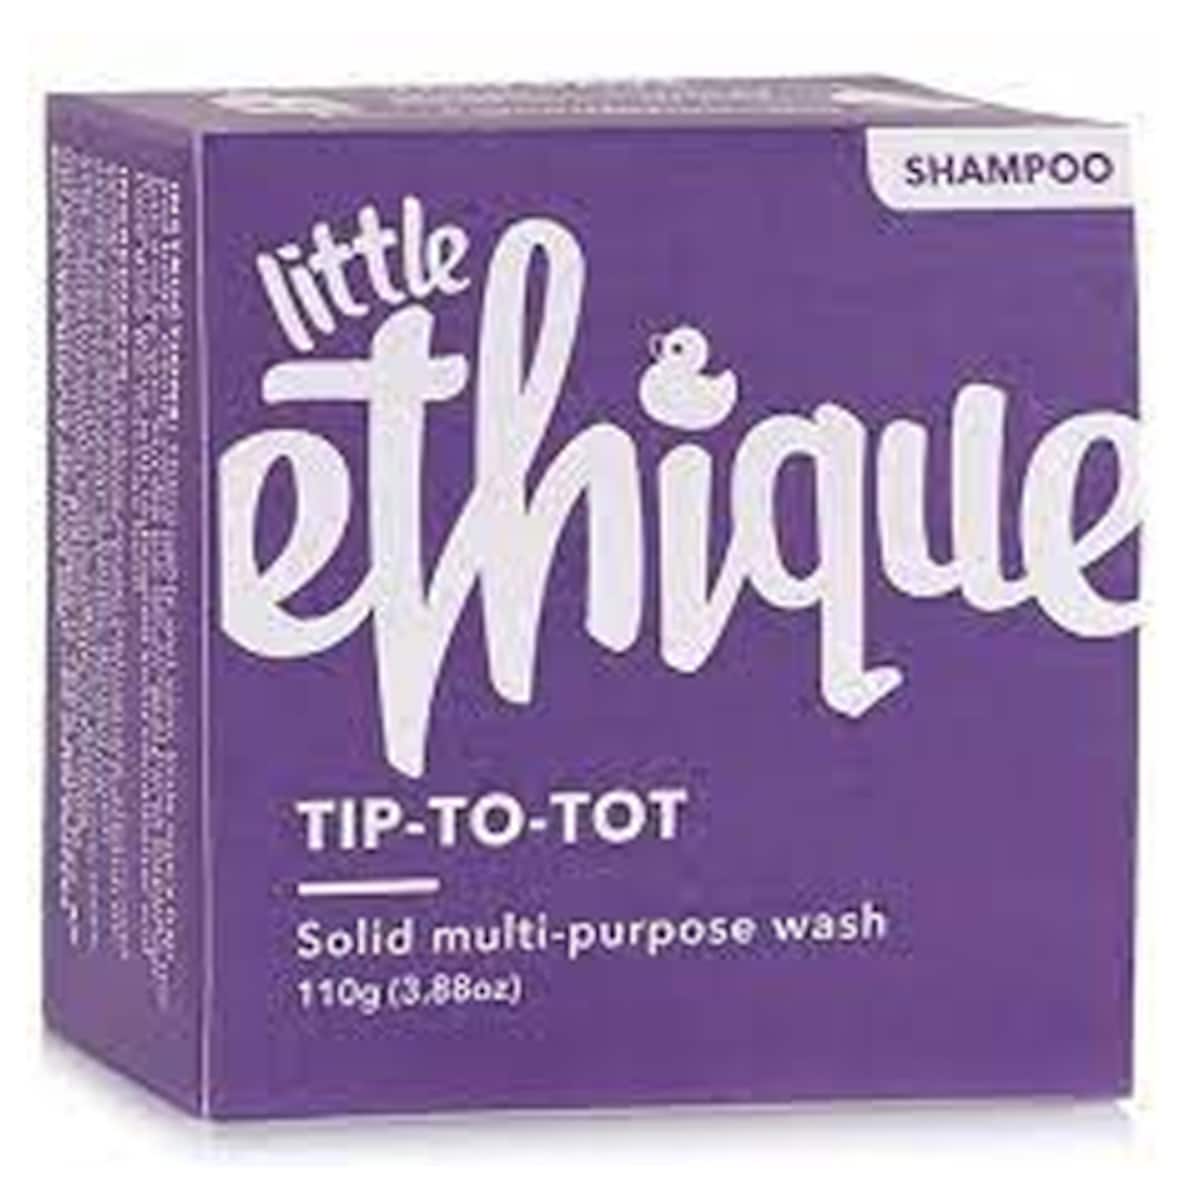 LITTLE ETHIQUE Solid Shampoo & Bodywash Tip-to-Tot 110g